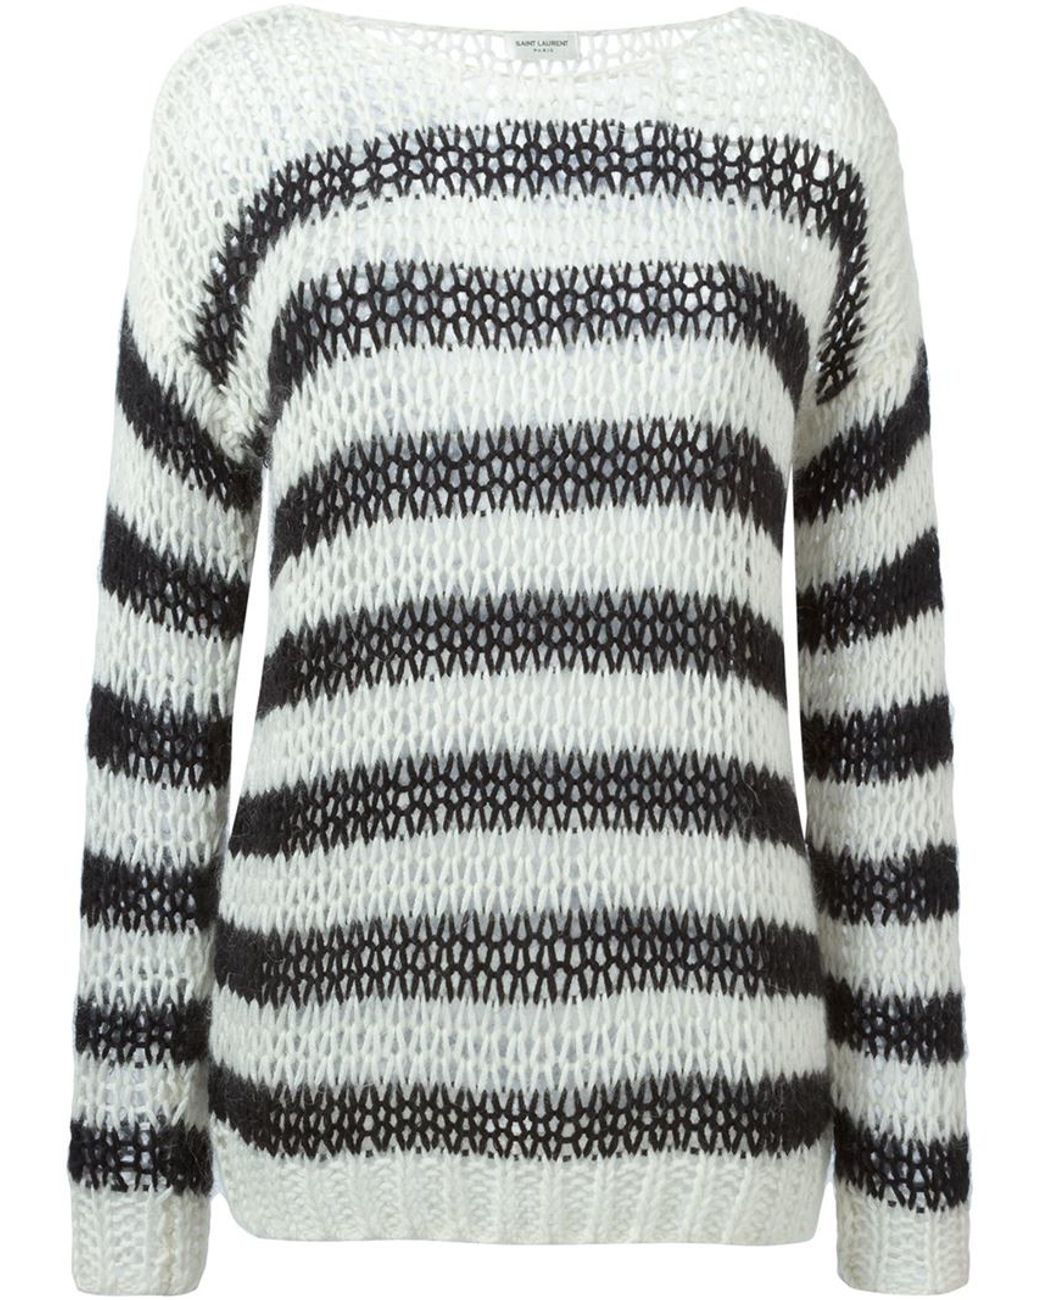 Saint Laurent Loose Knit Striped Sweater in Black | Lyst